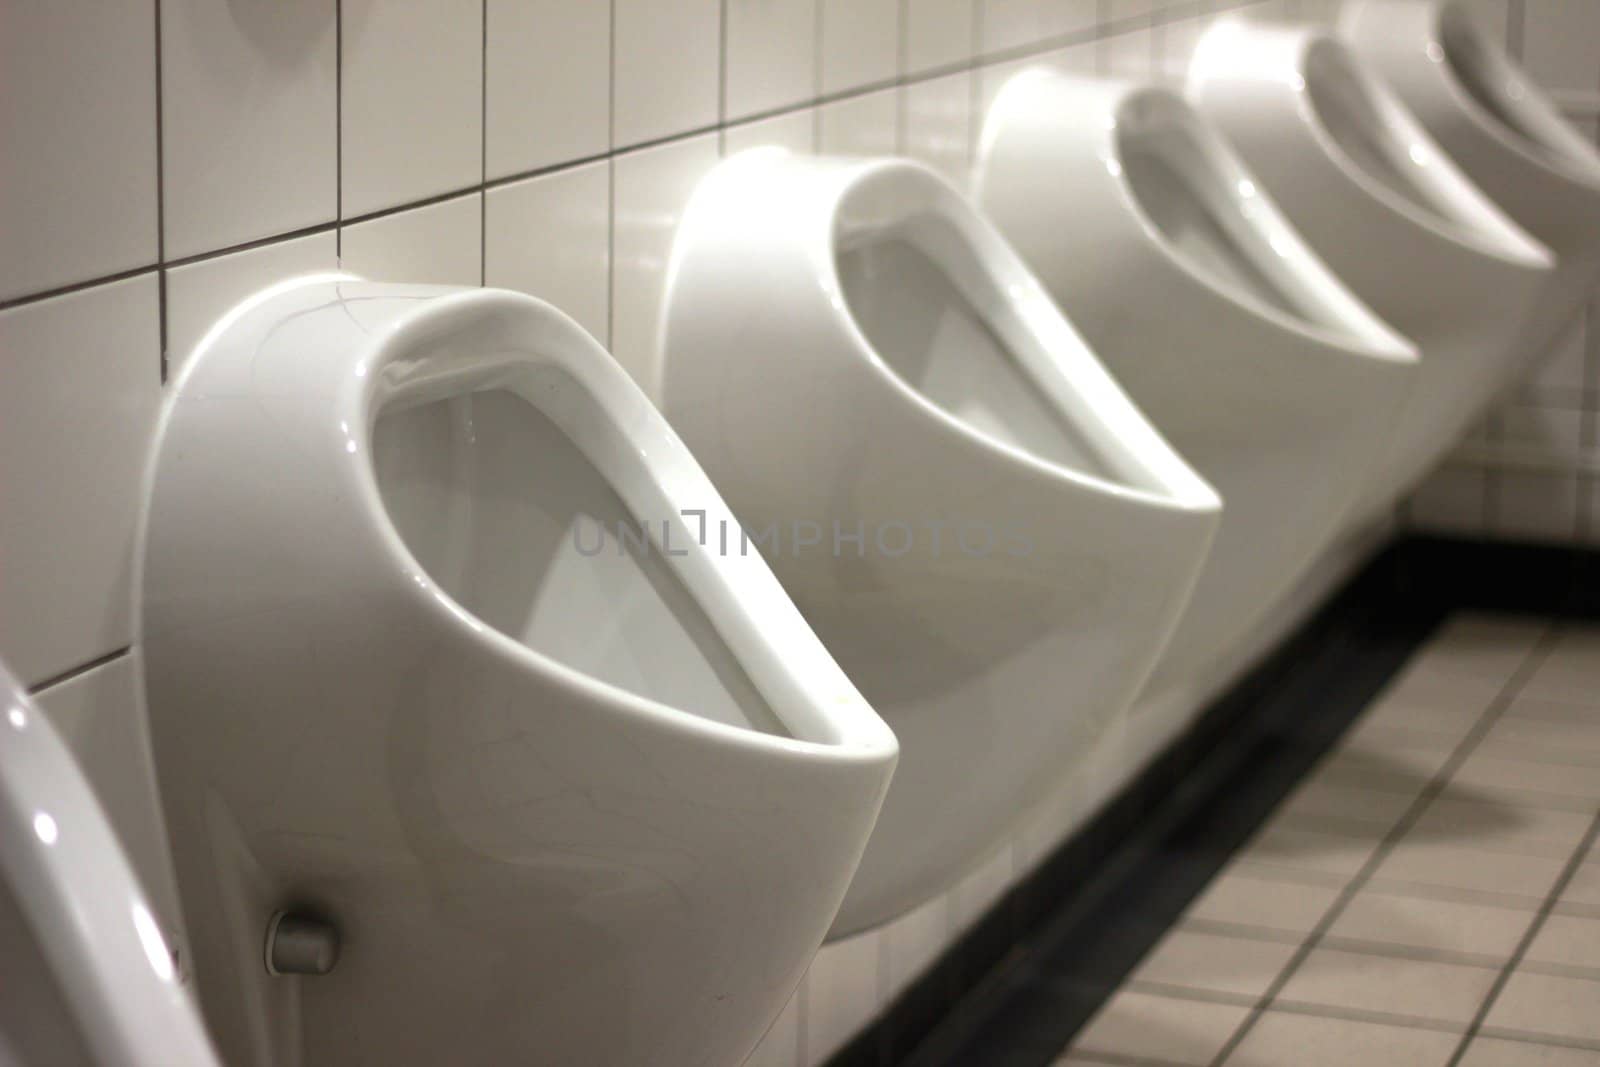 plain urinals